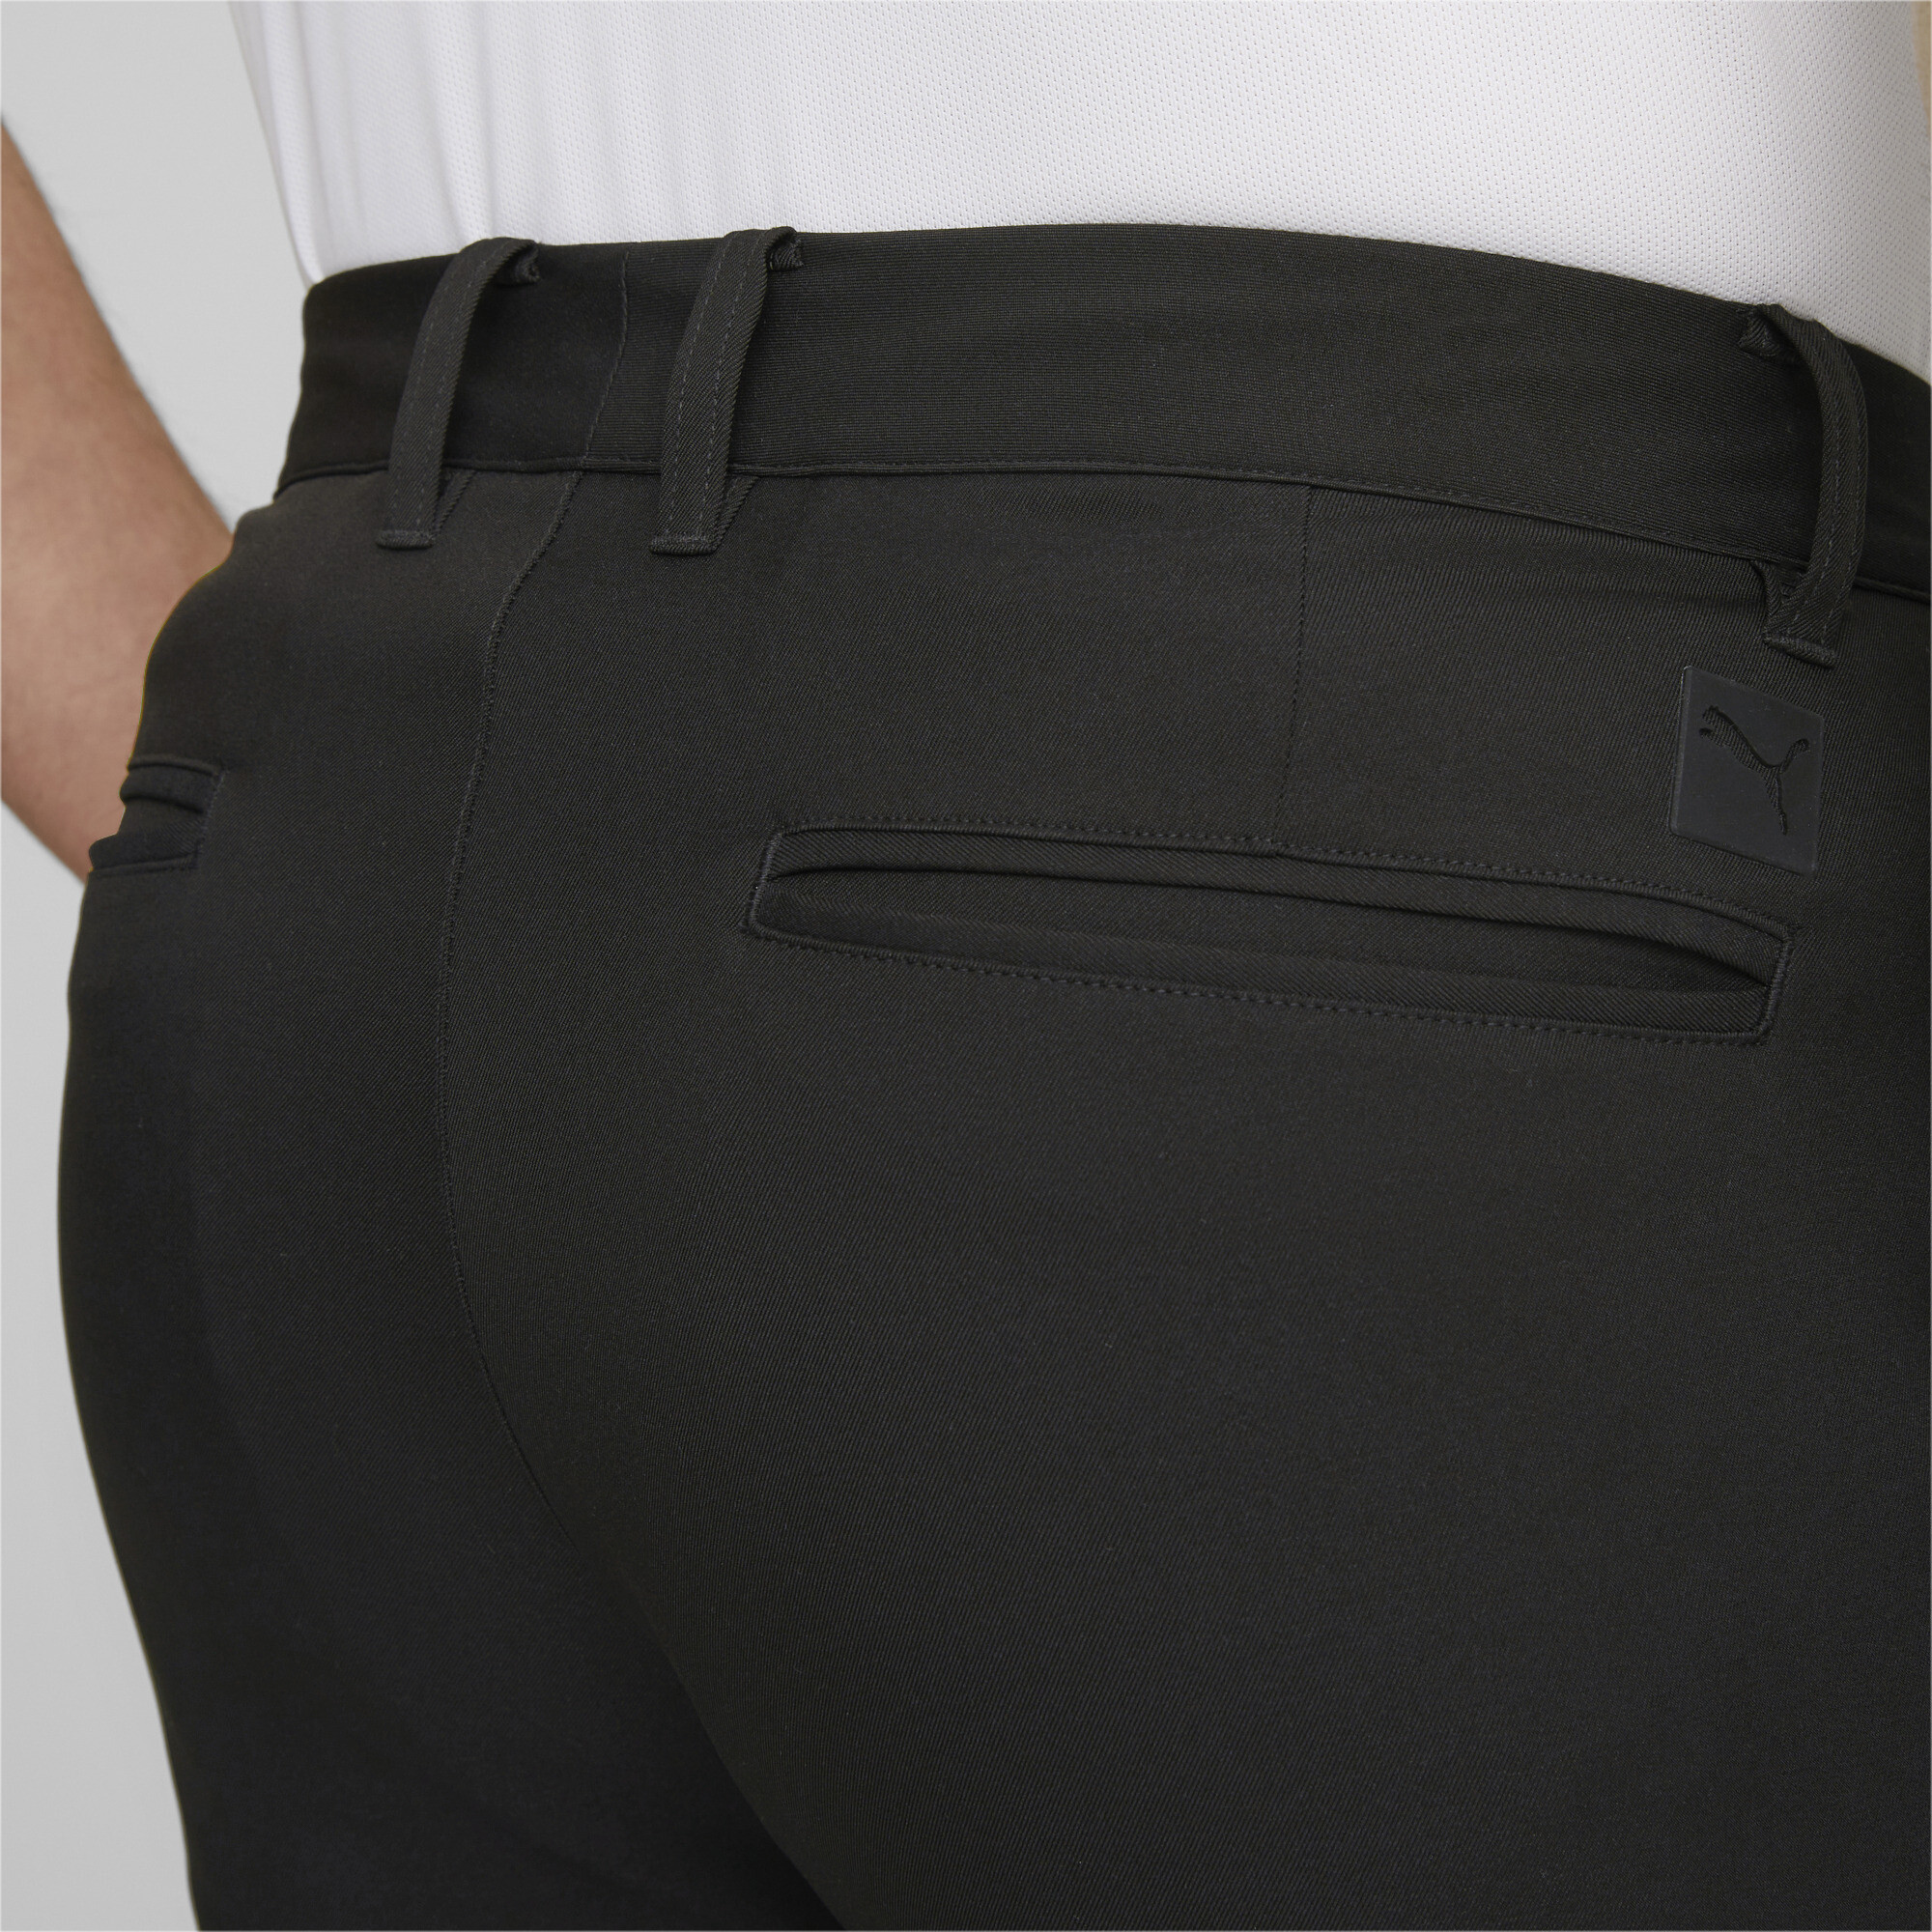 Men's Puma Dealer Golf Pants, Black, Size 33/34, Clothing